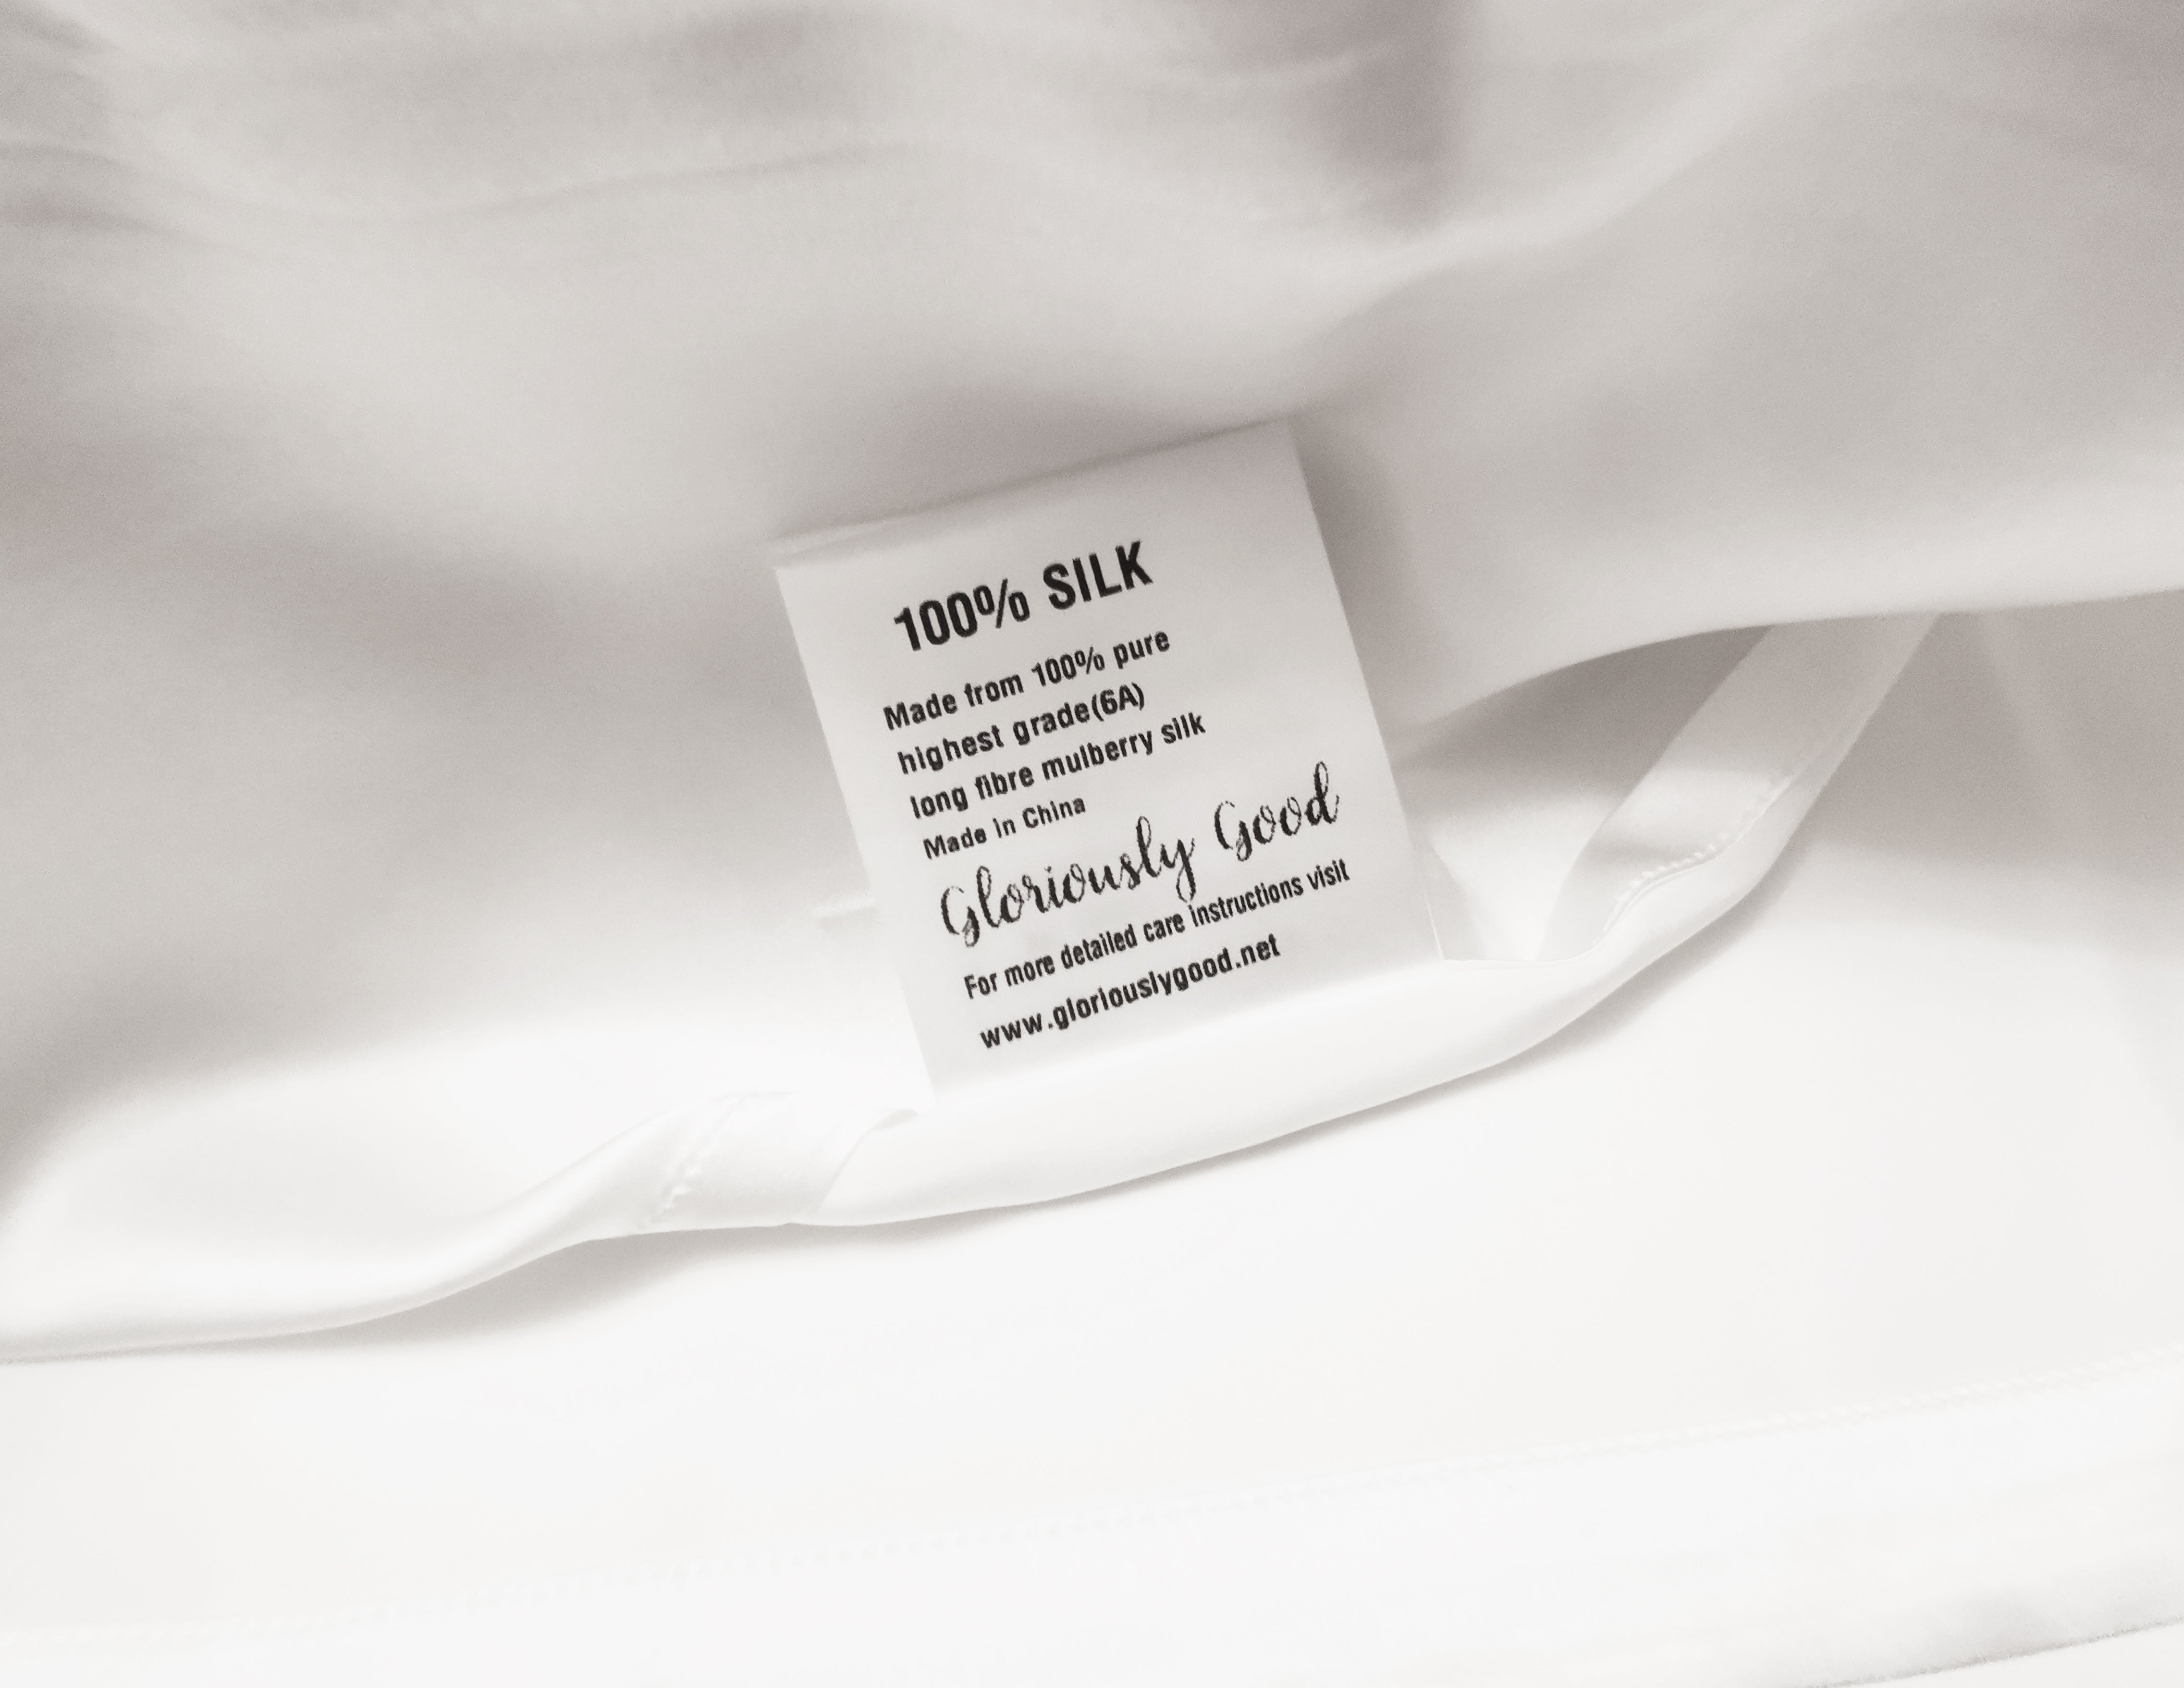 White Mulberry Silk Pillowcase For Gloriously Good Hair & Skin